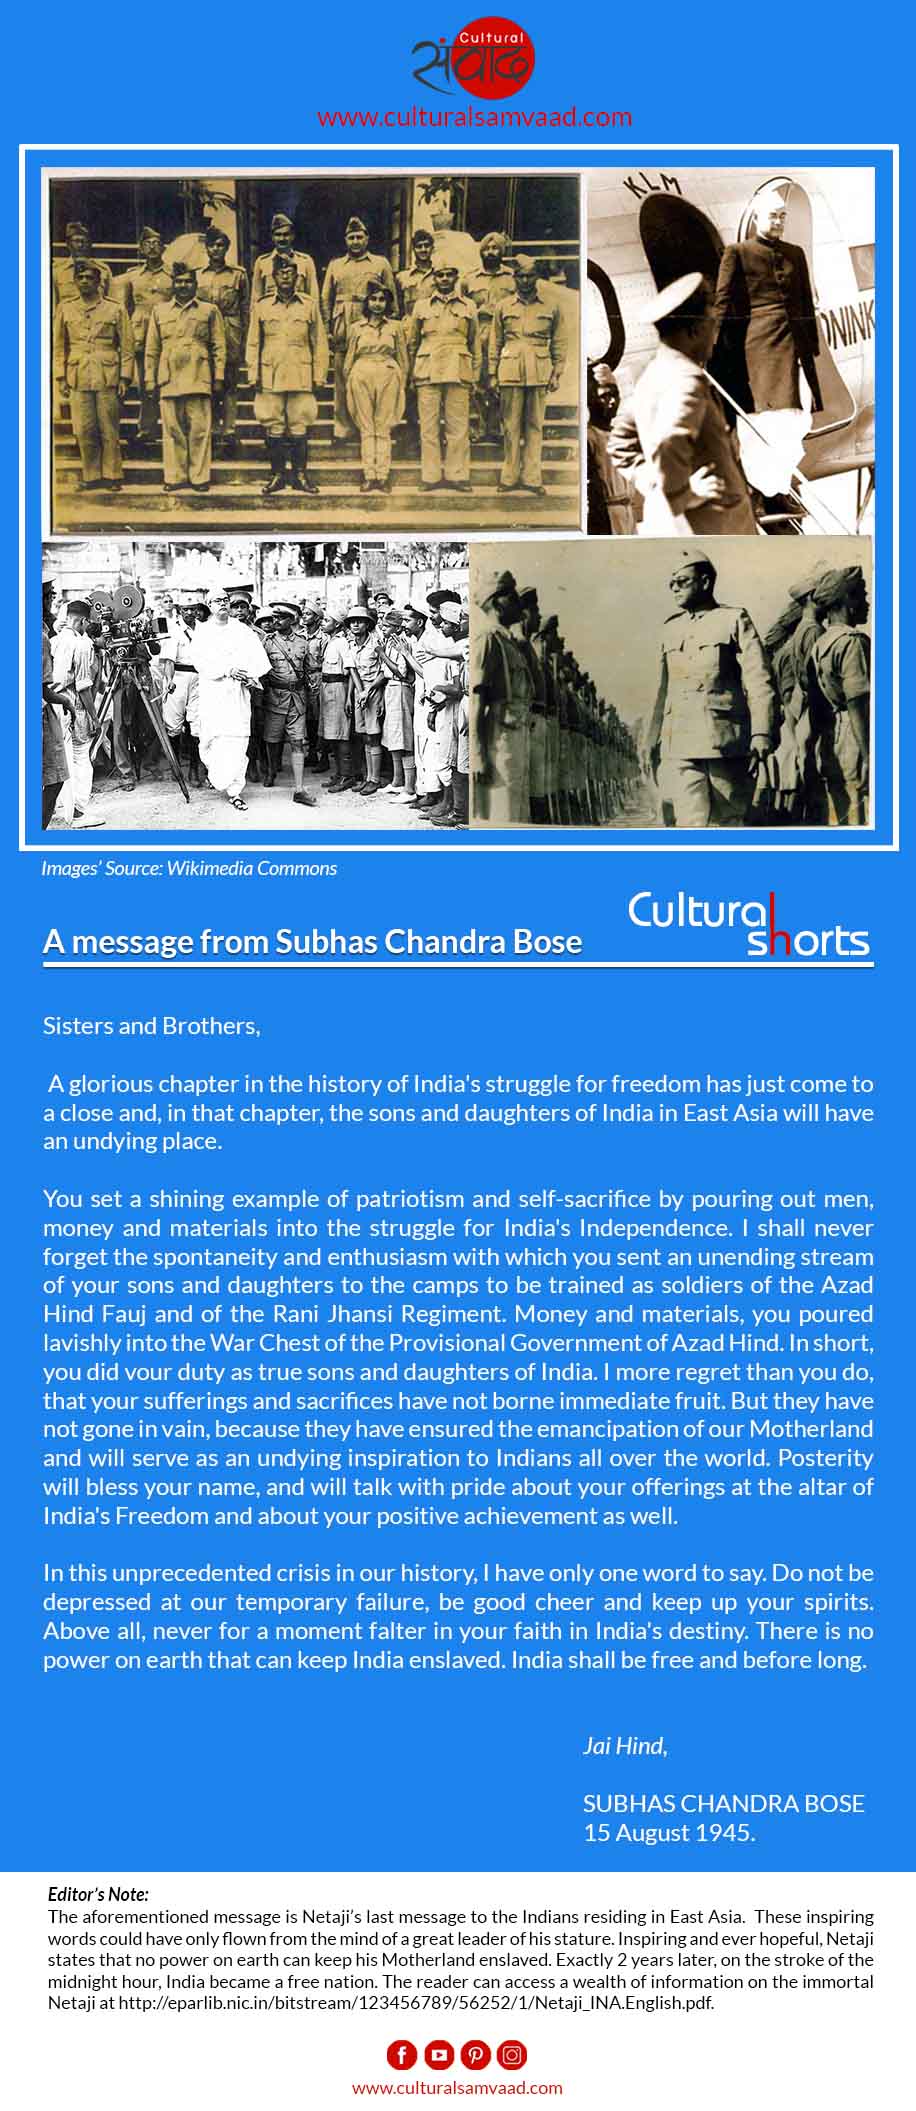 Last message - Subhash Chandra Bose